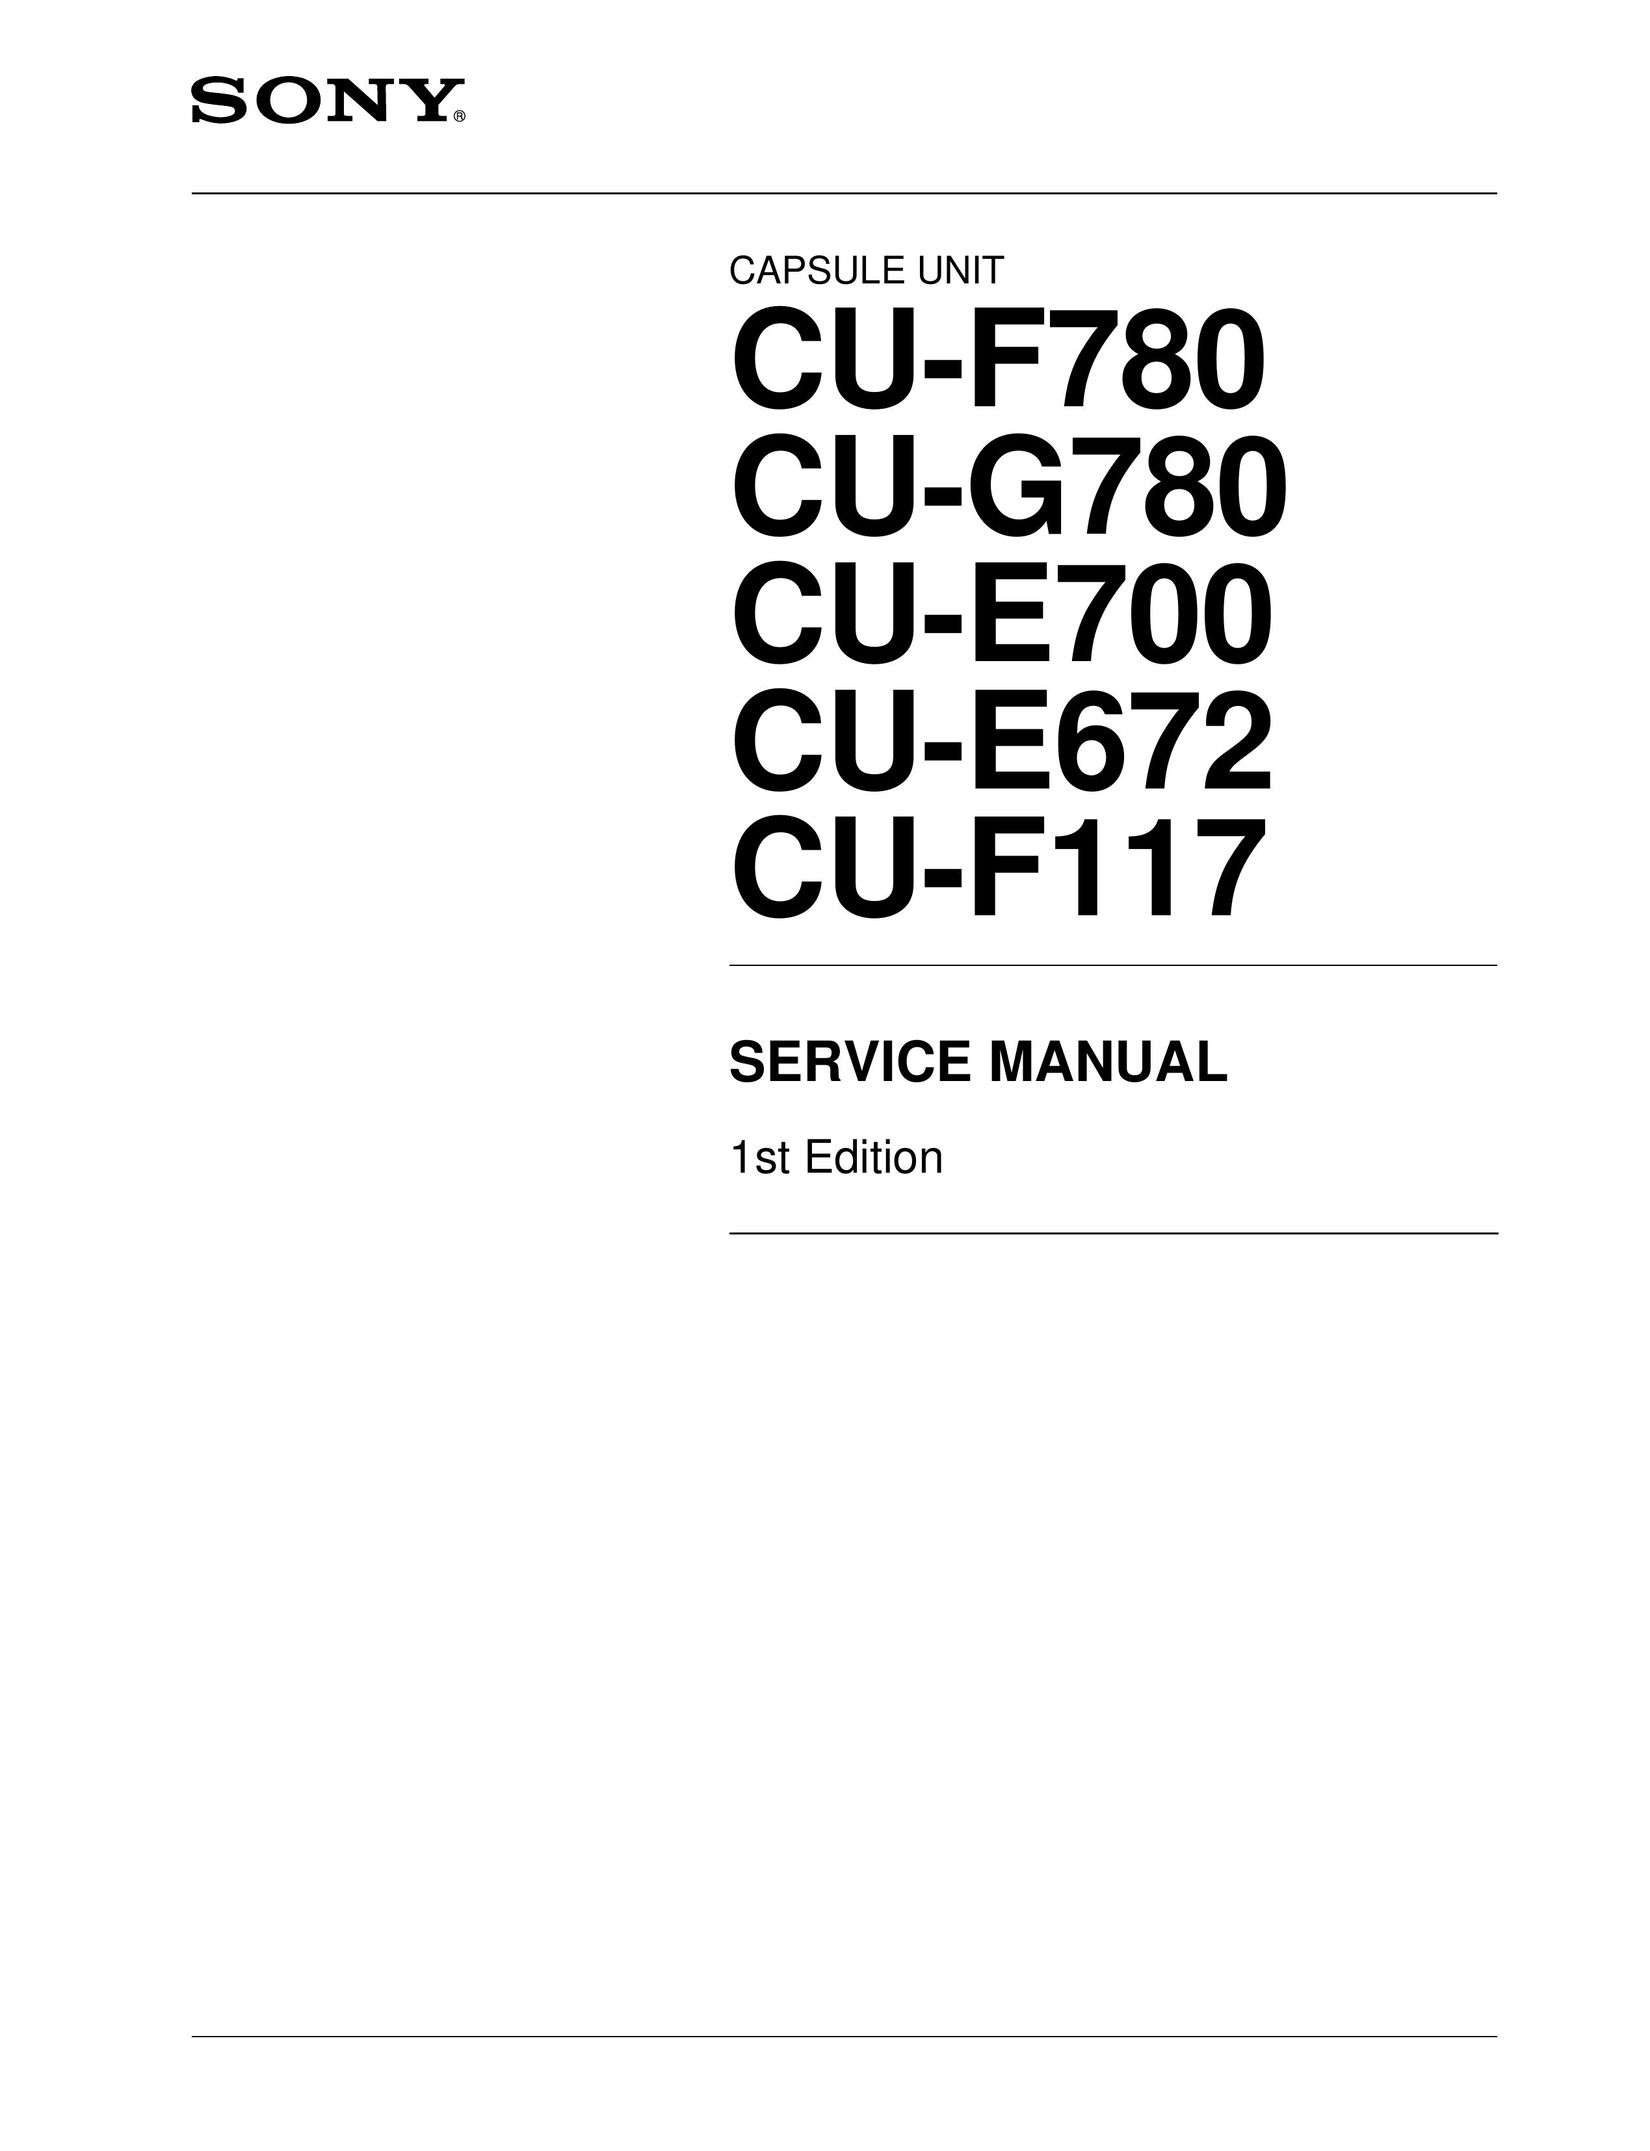 Sony F117 Satellite Radio User Manual